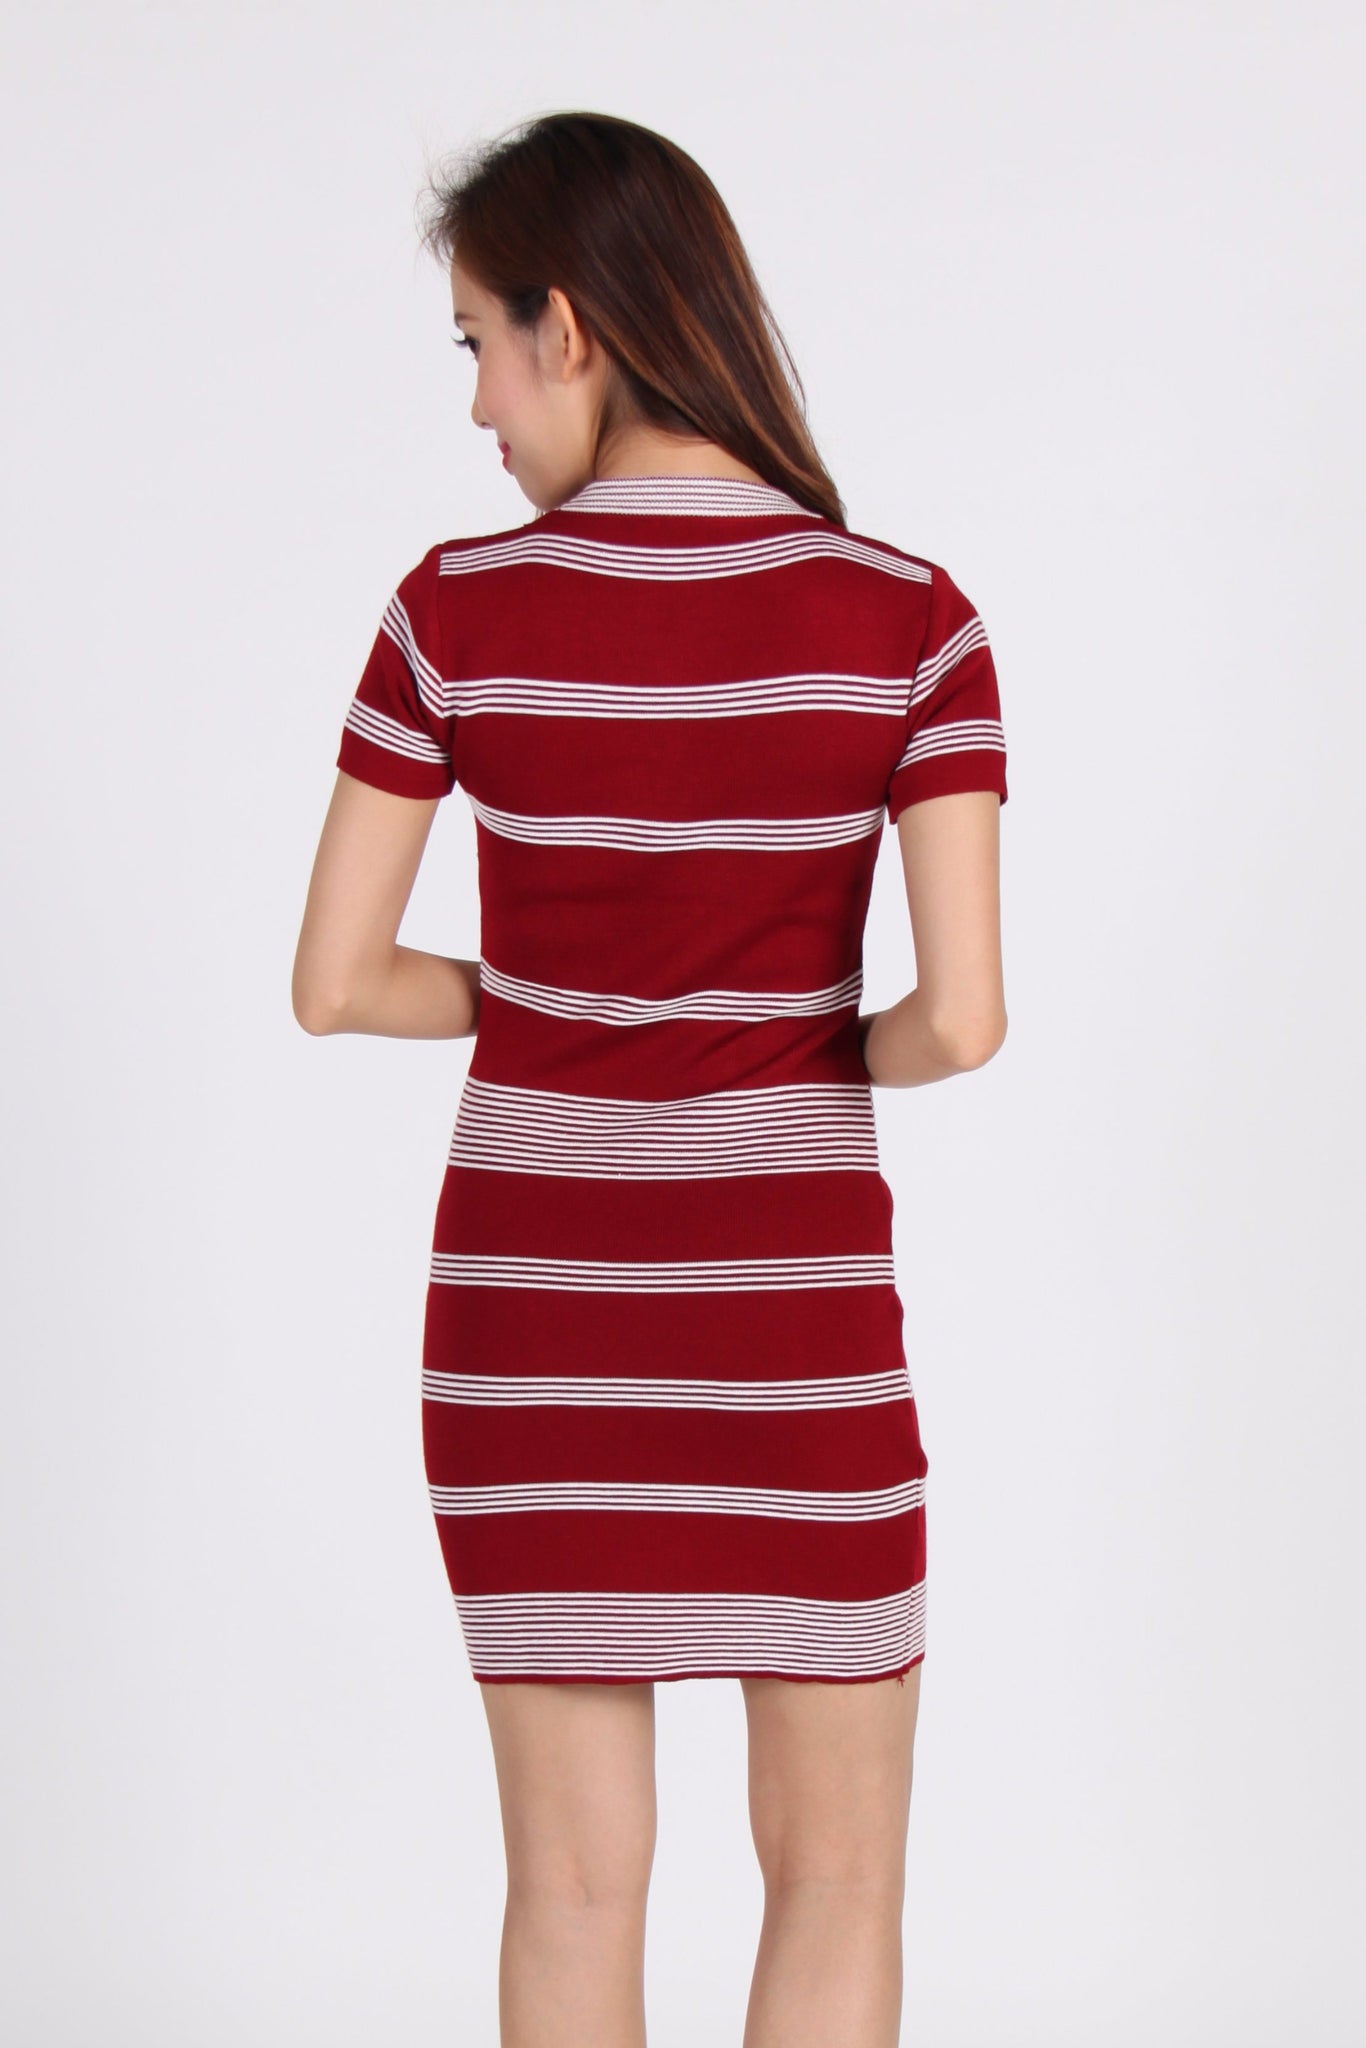 Sleeve Stripes Contrast Bodycon Dress in Maroon